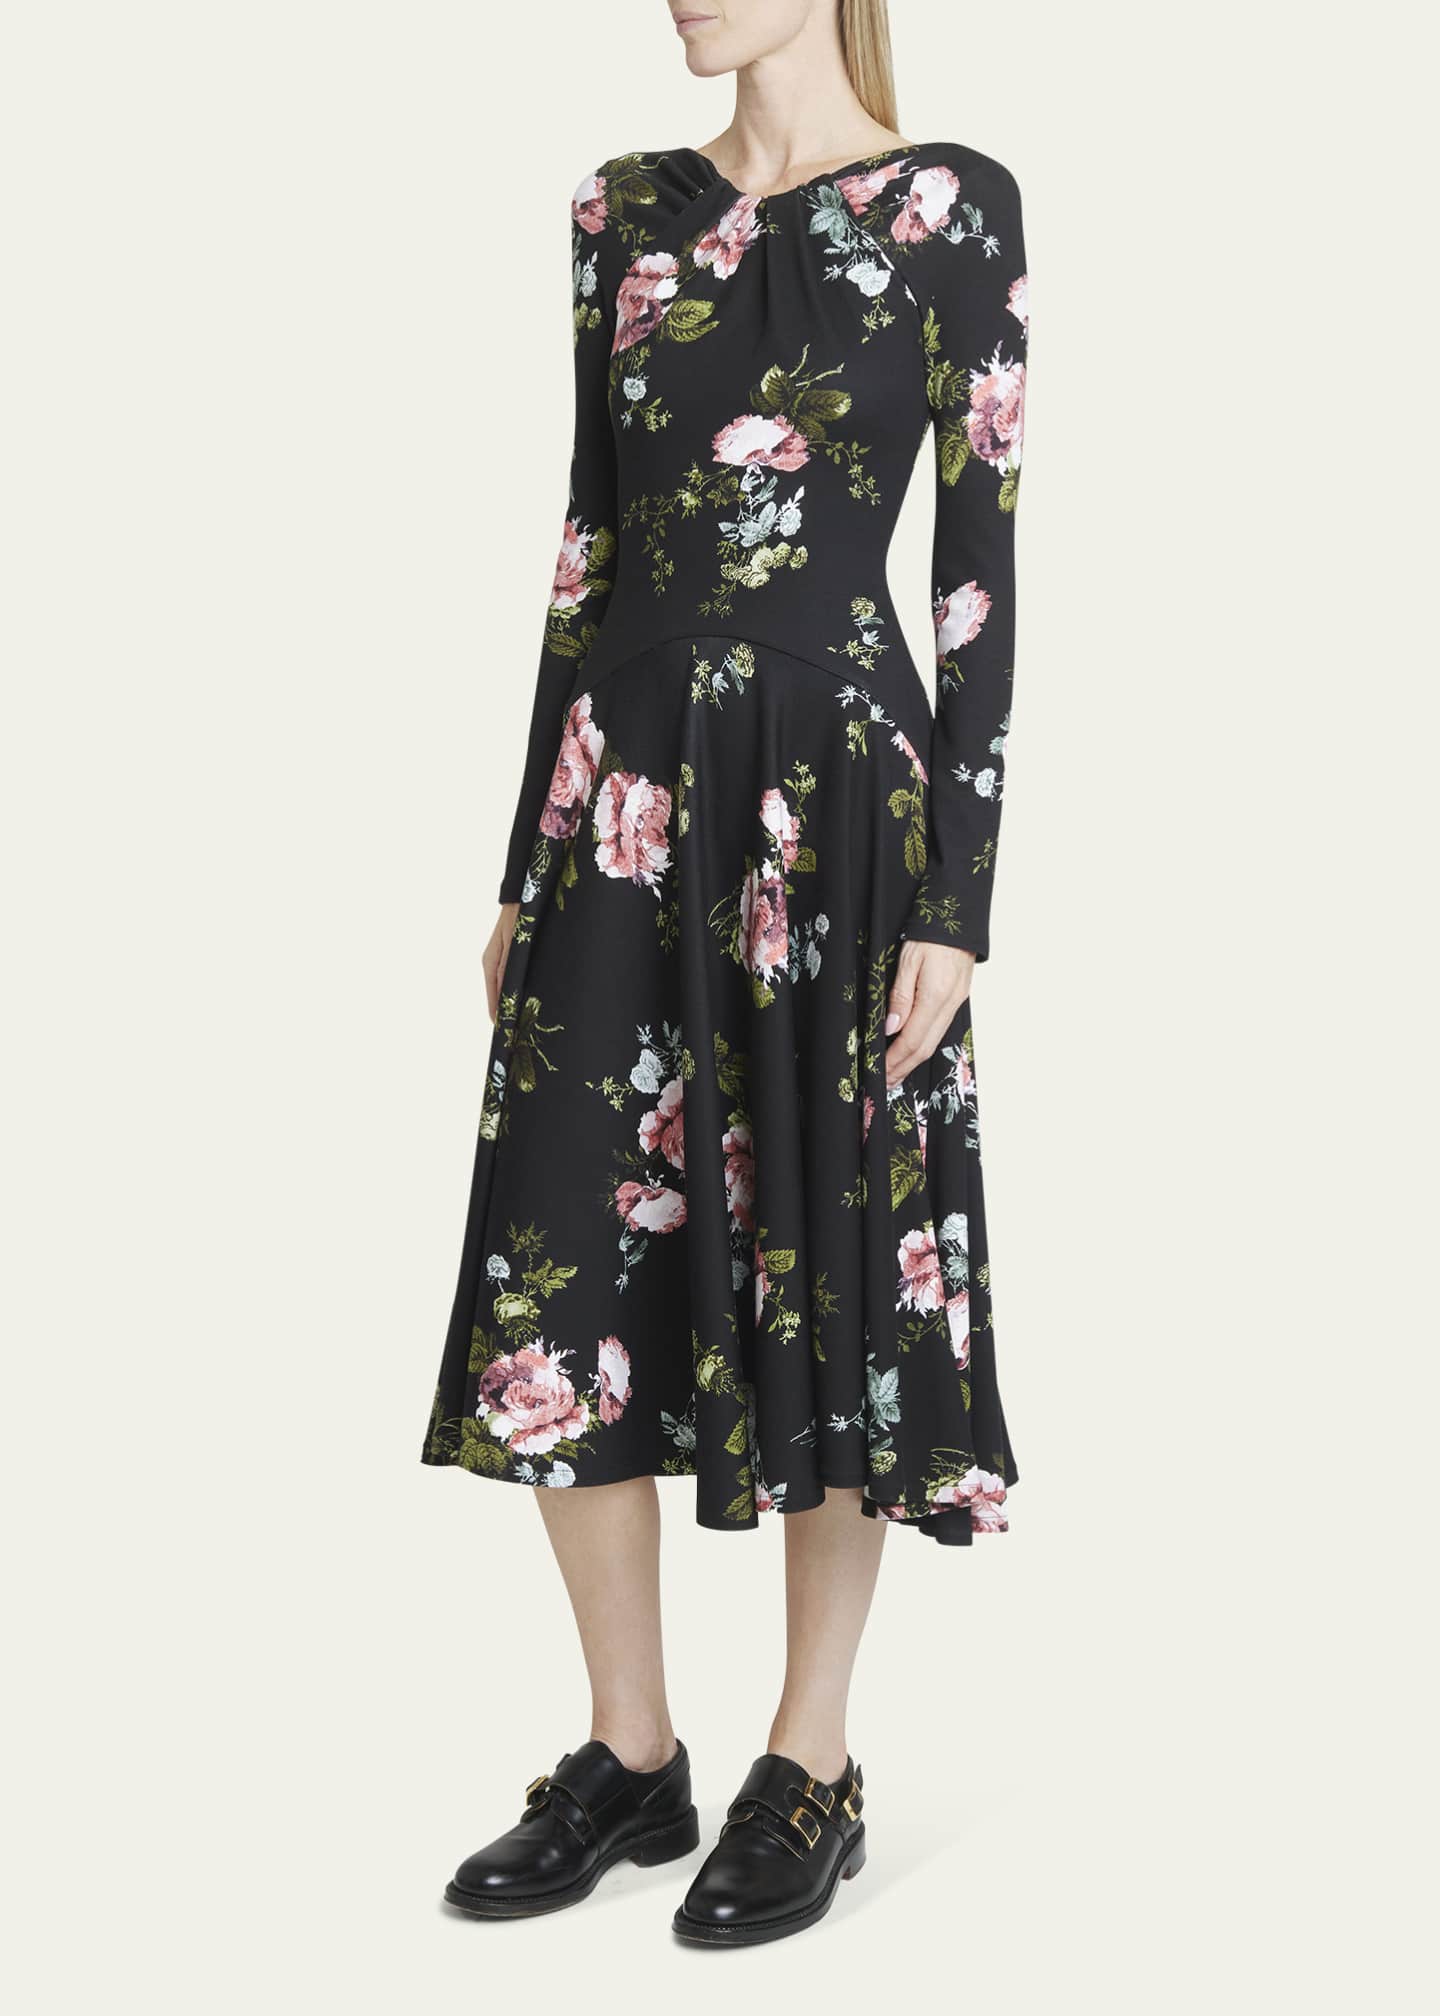 Erdem Floral-Print Gathered Neck Midi Dress - Bergdorf Goodman